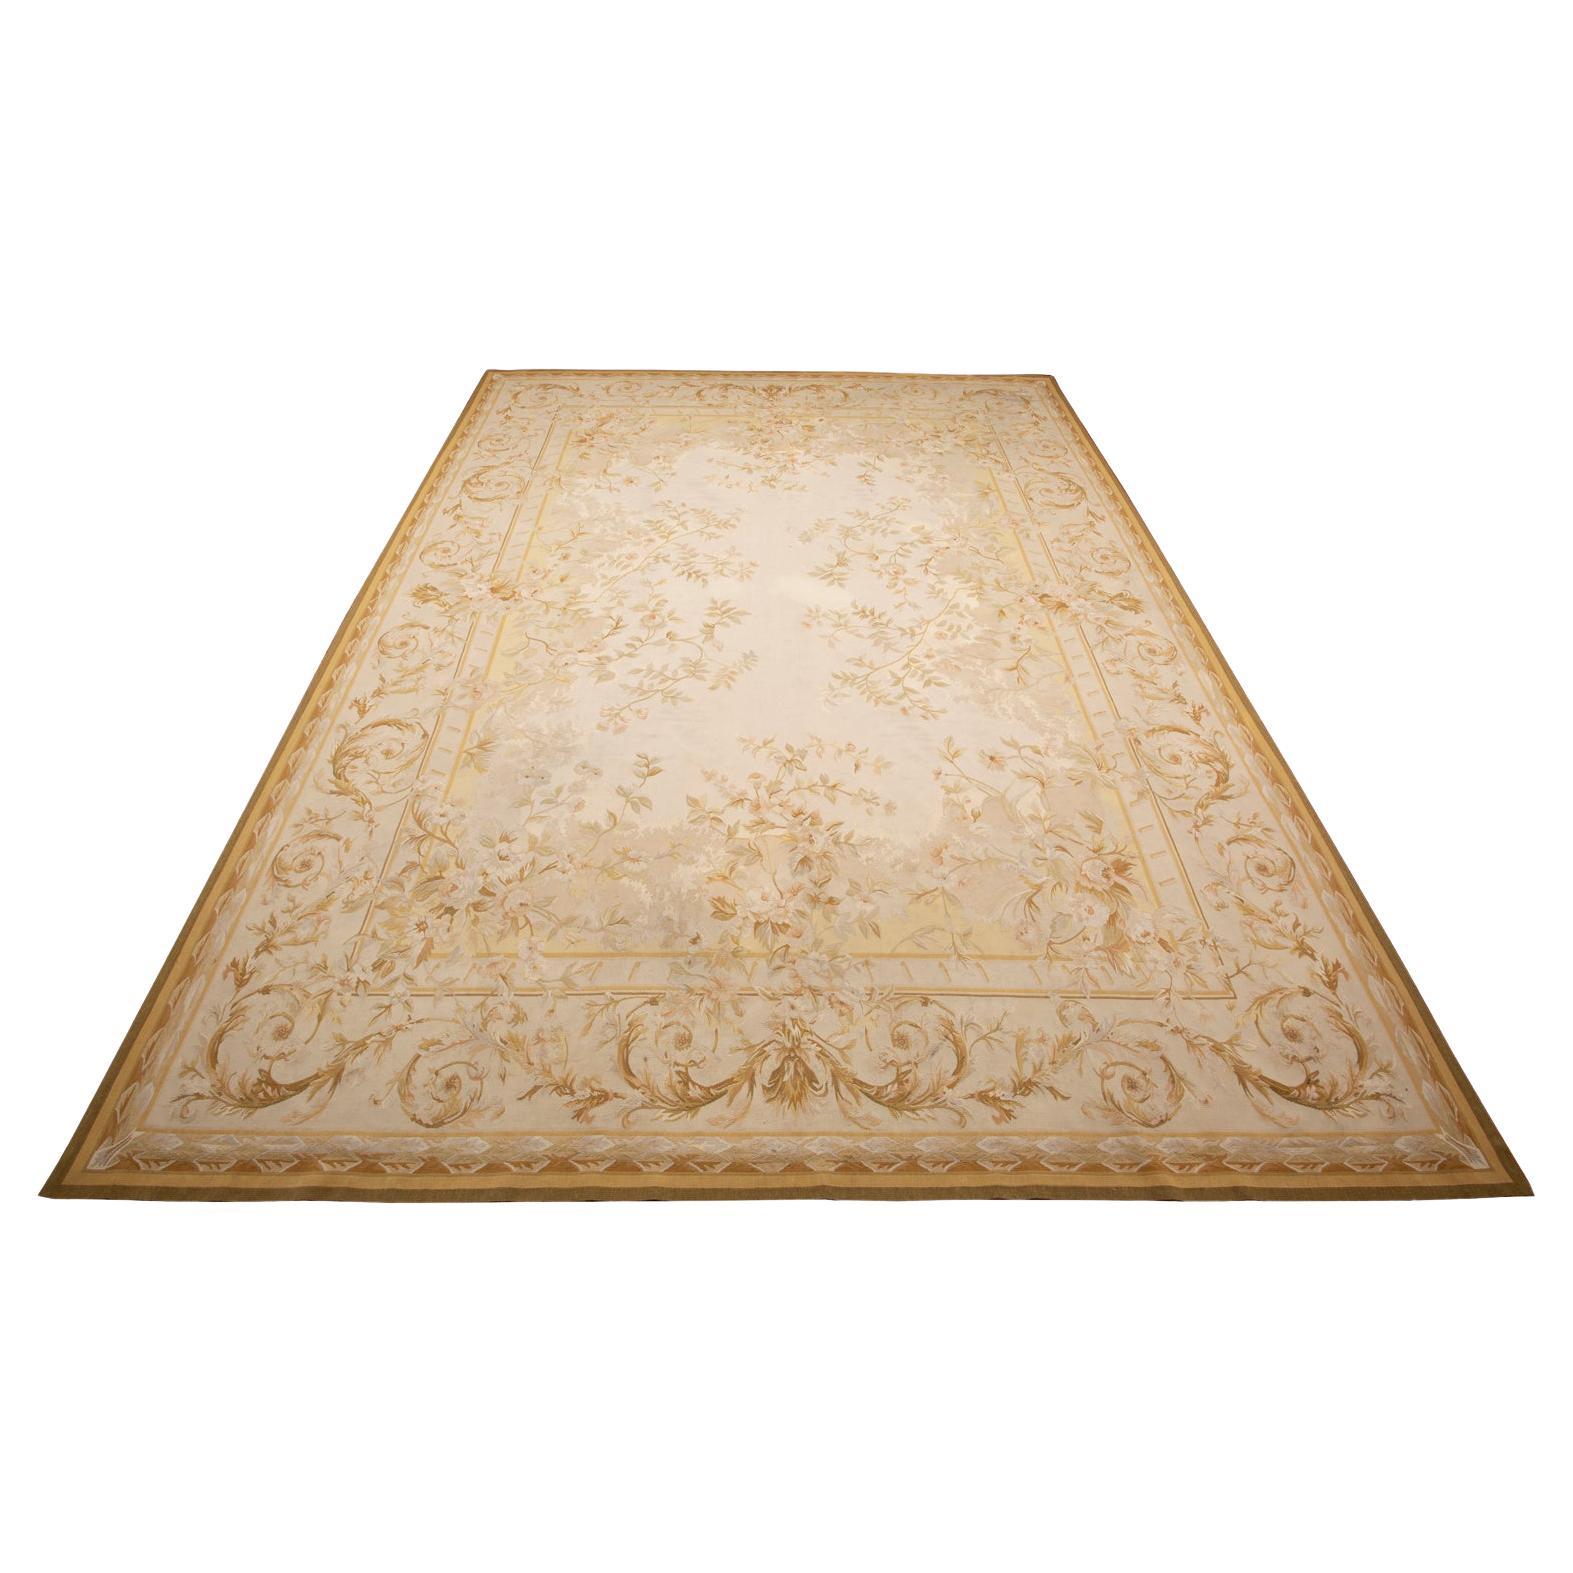 19th Century Aubusson Carpet by Stark